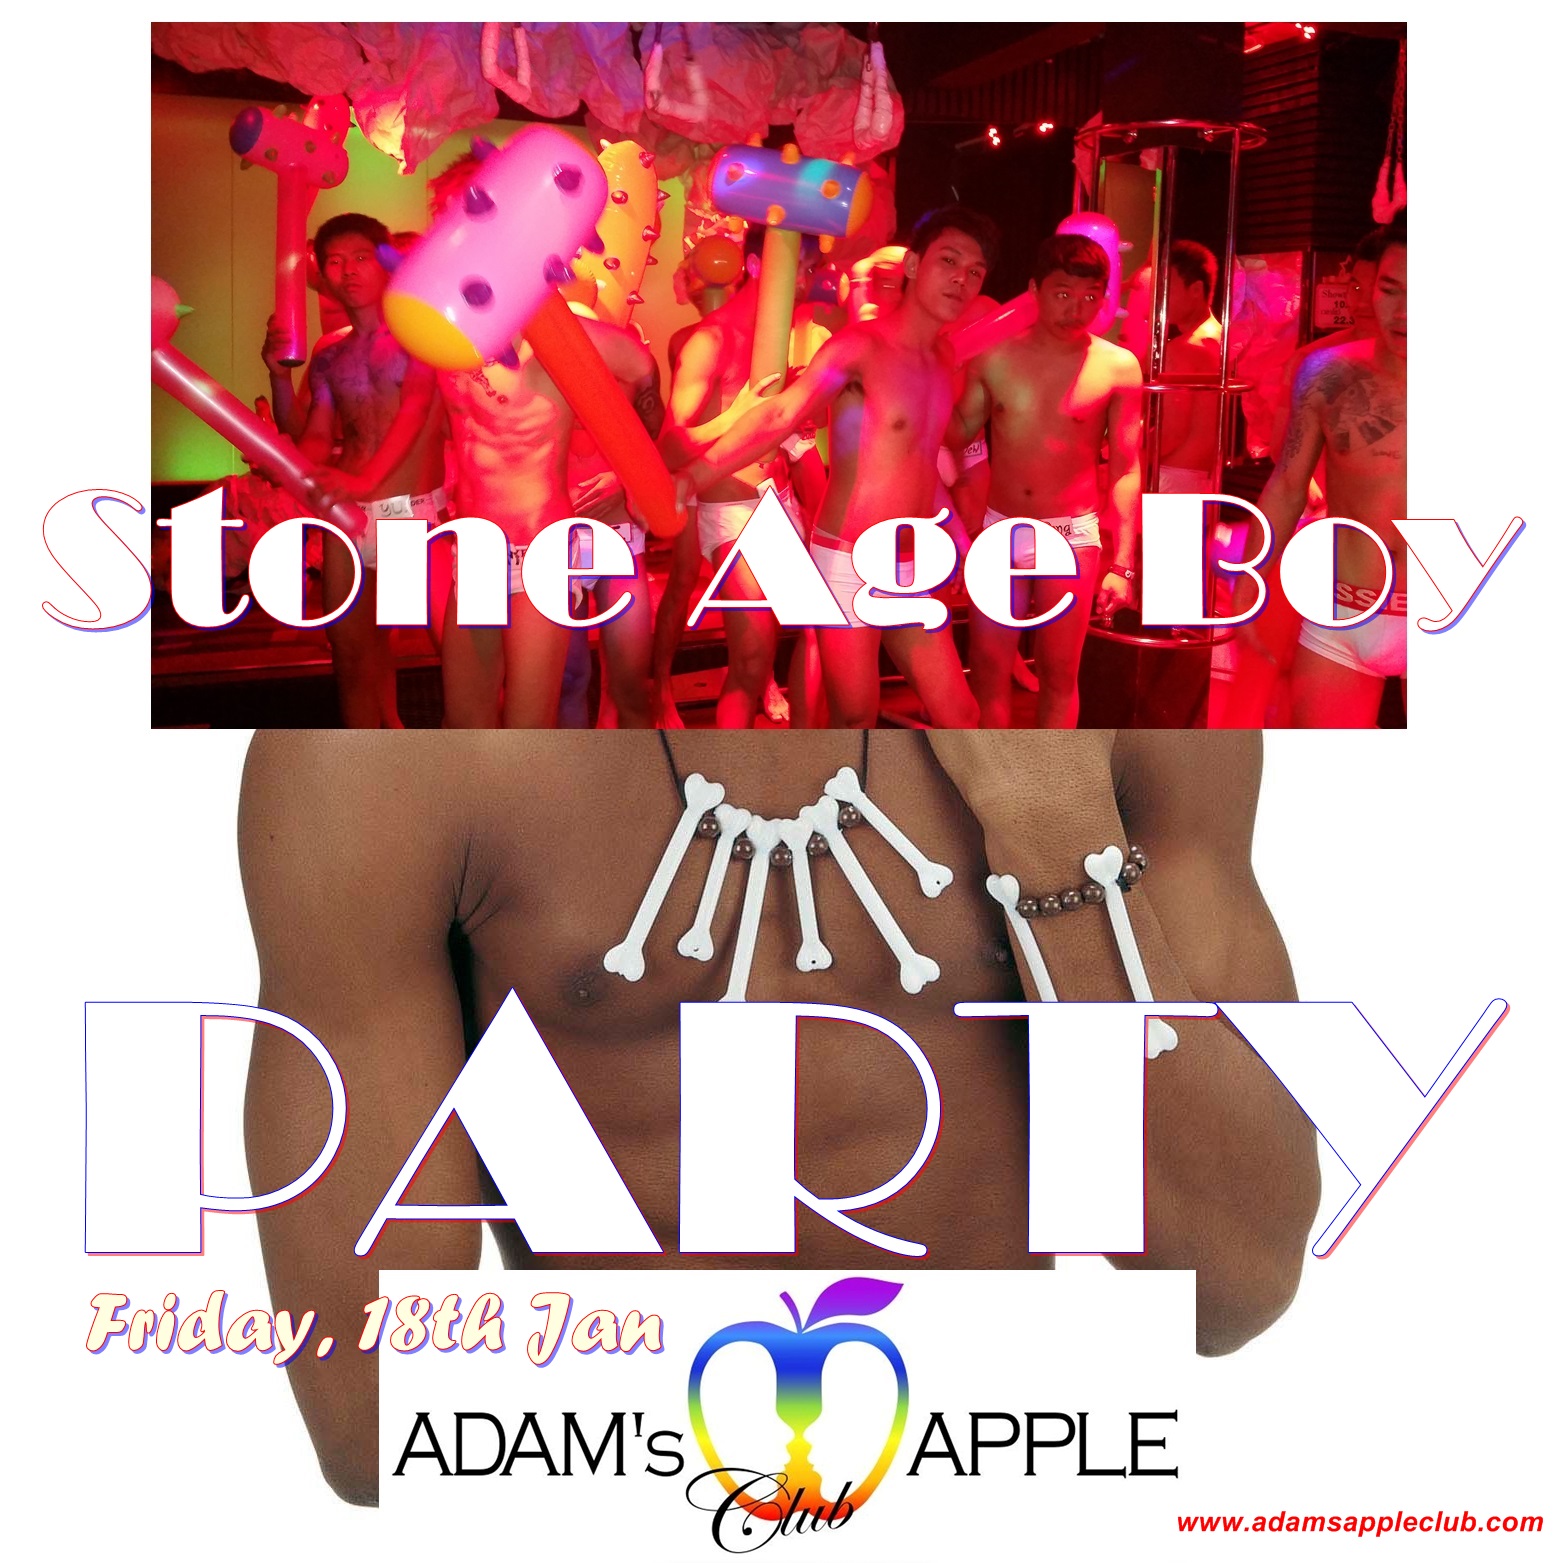 Stoneage Boy Party Adams Apple Club